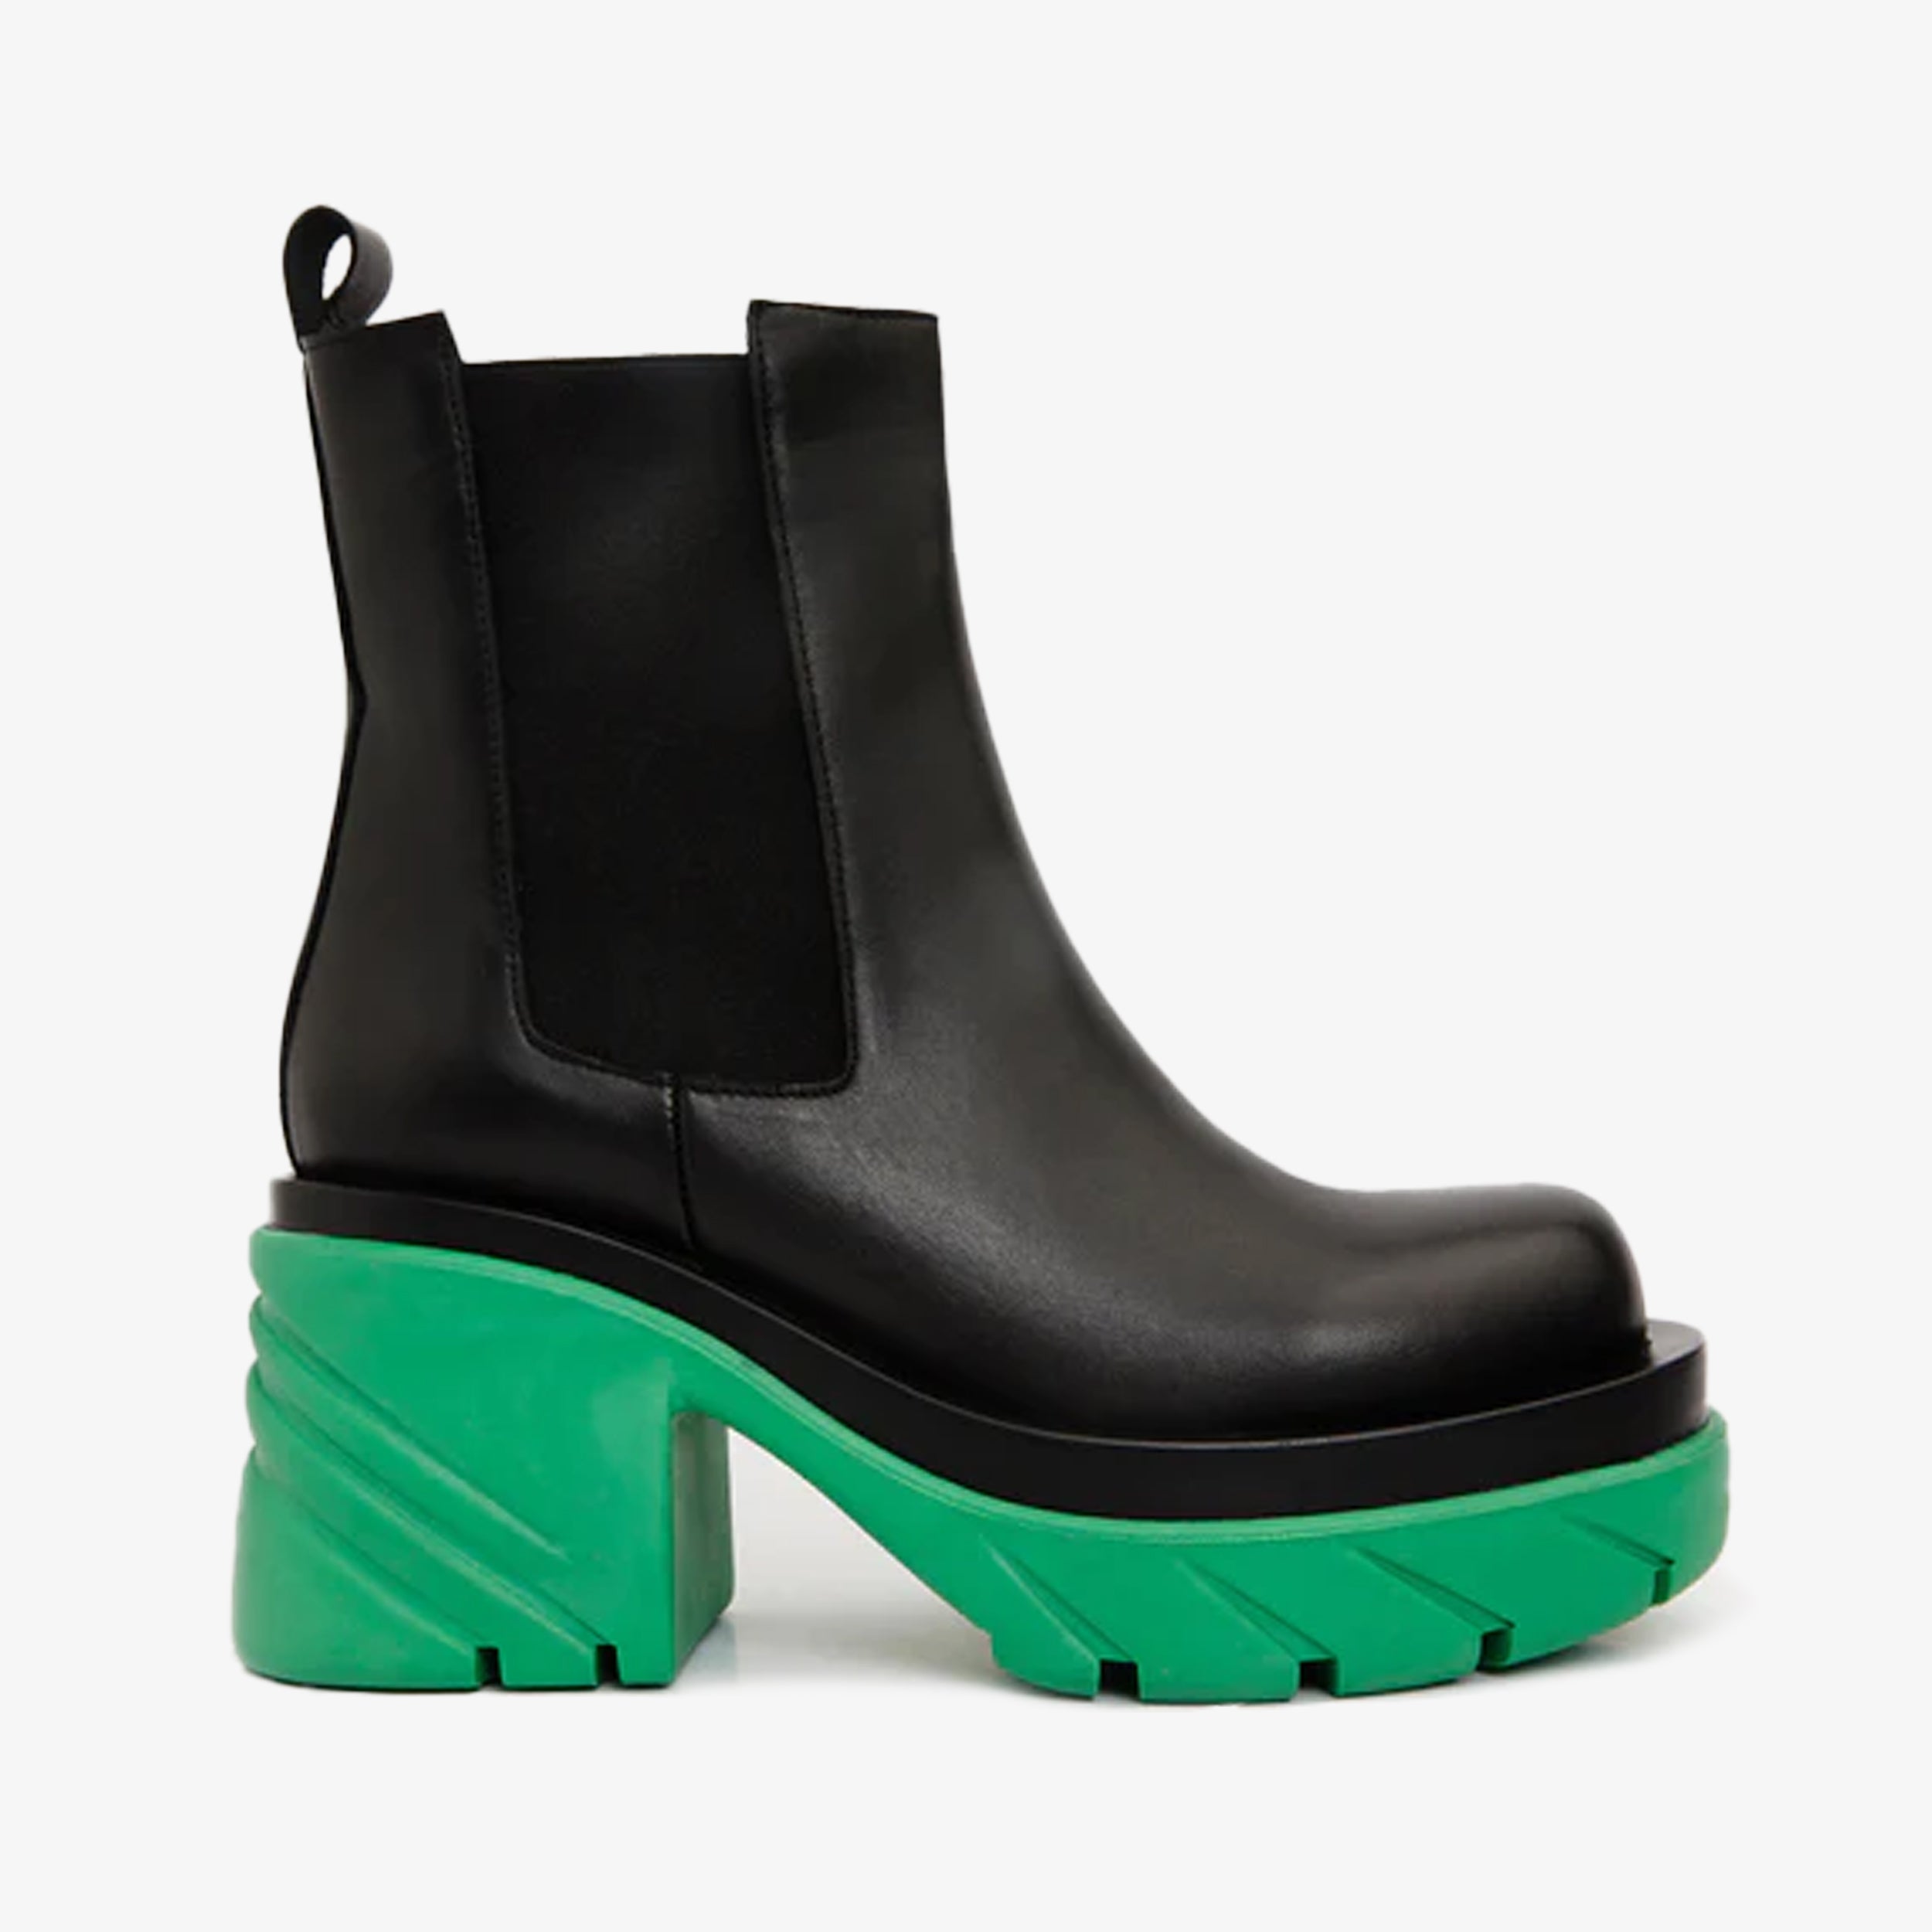 The Olga Black & Green Leather Mid Calf Women Boot